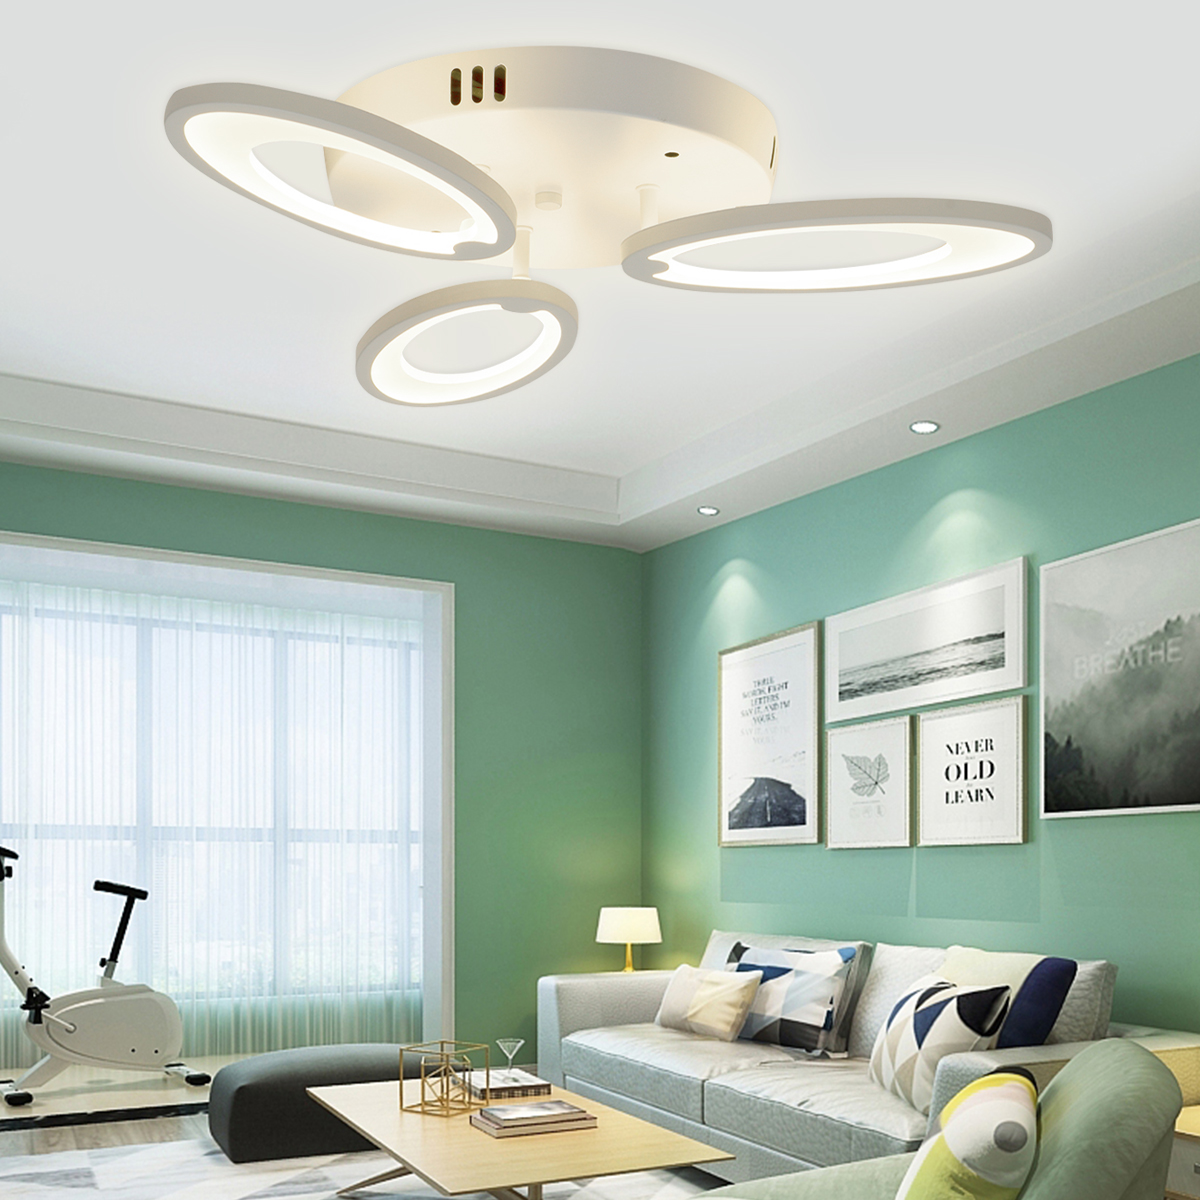 3-Heads-Modern-LED-Ceiling-Acrylic-Home-Lights-Home-Chandelier-LampRemote-3200-6500K-1793889-2